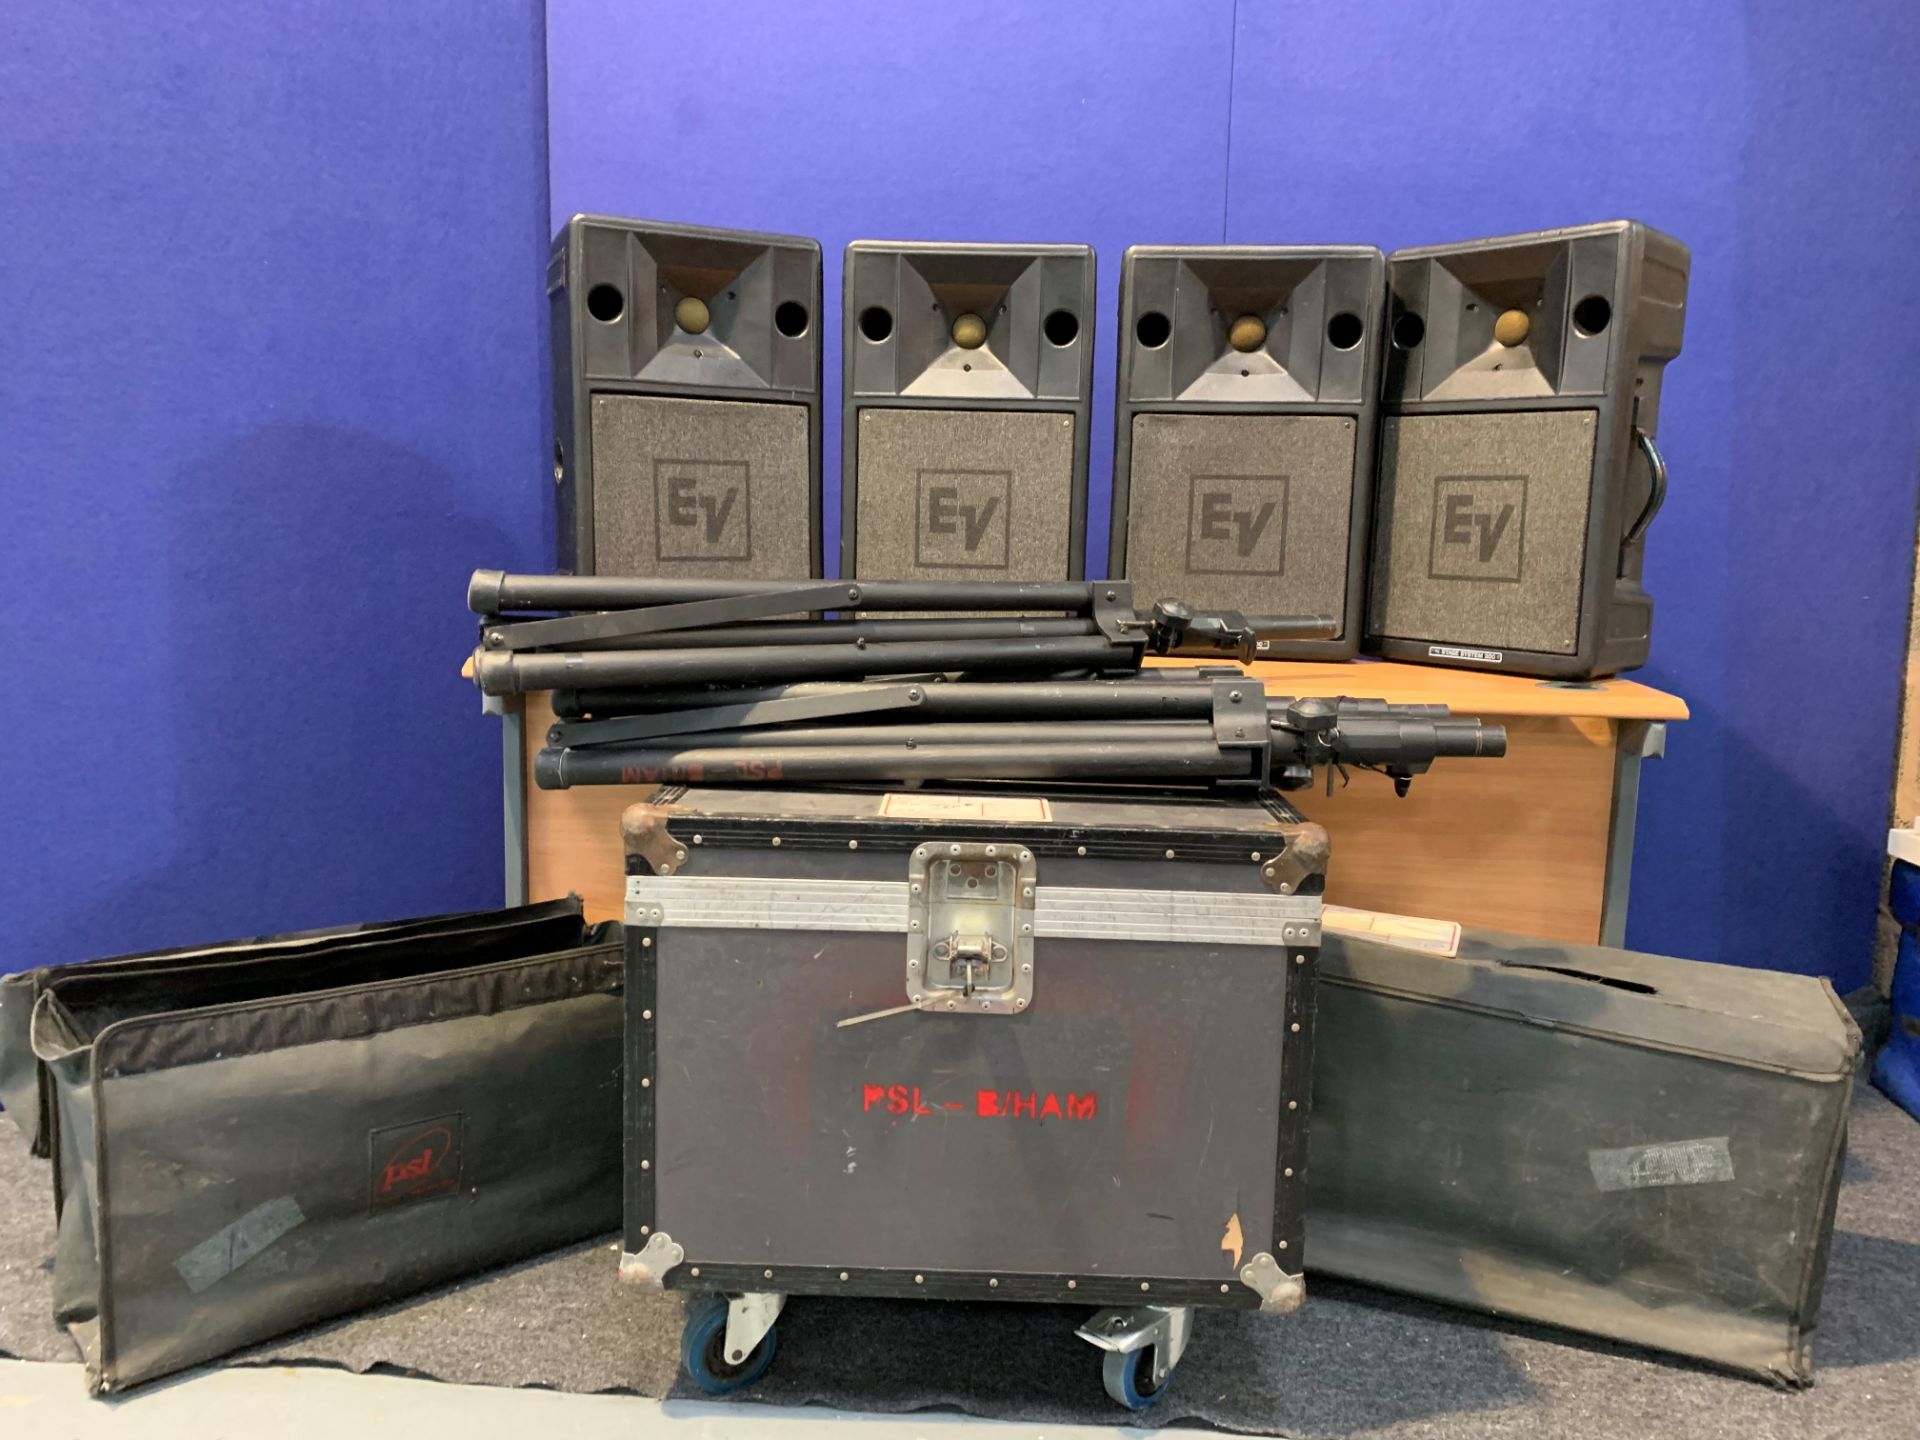 4 x EVS200 Speakers - 2 In Flightcase 2 in Bags c/w 4 Stands